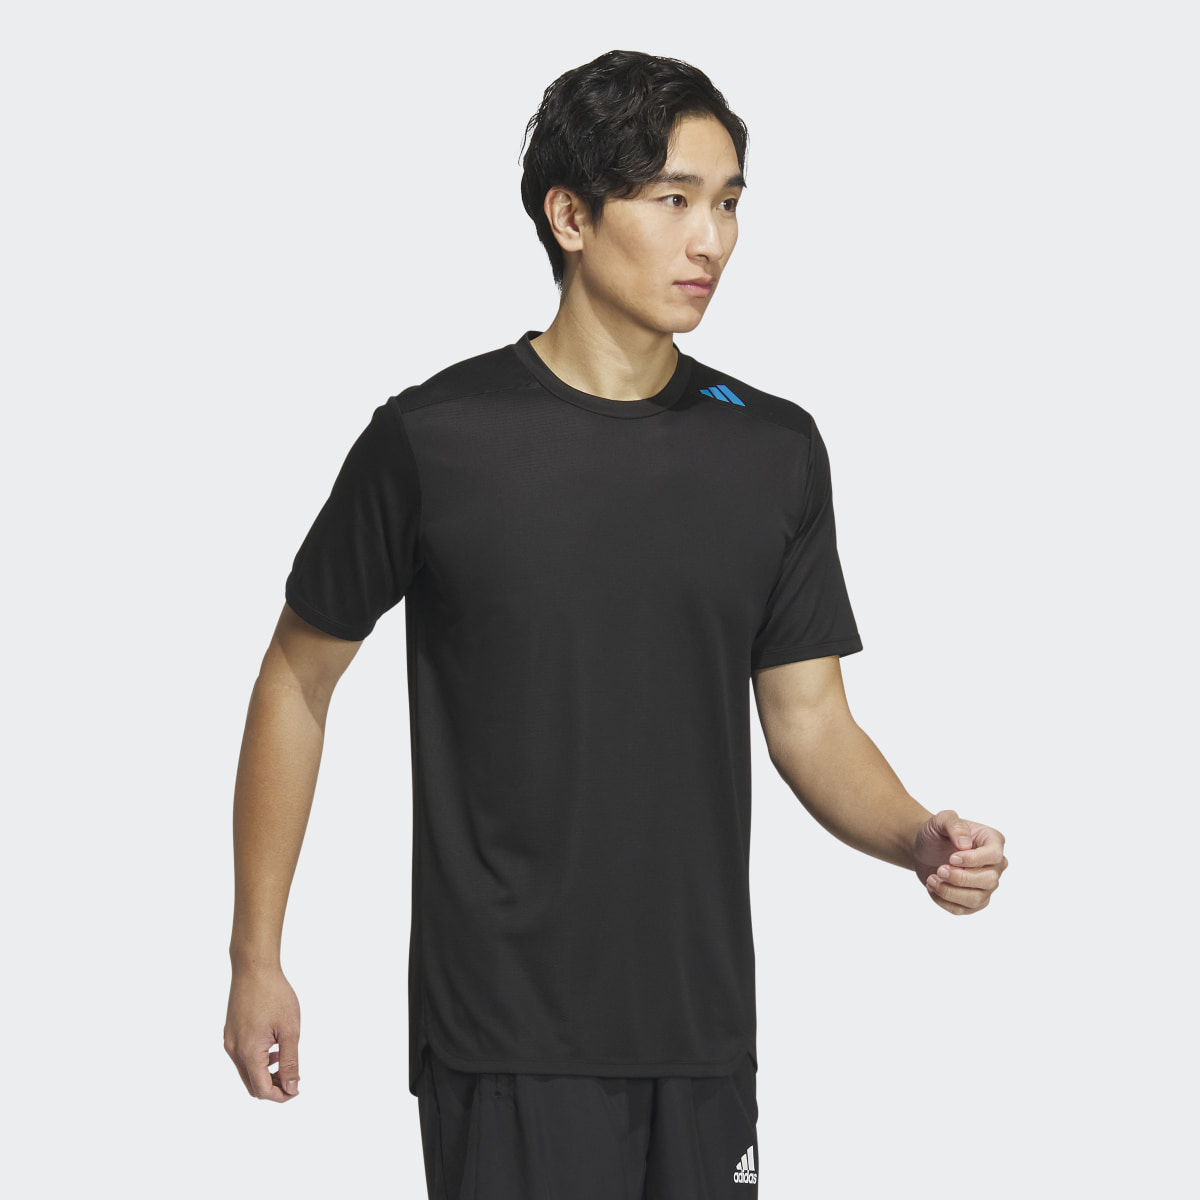 Adidas Designed 4 Training HEAT.RDY HIIT Training Tişörtü. 4